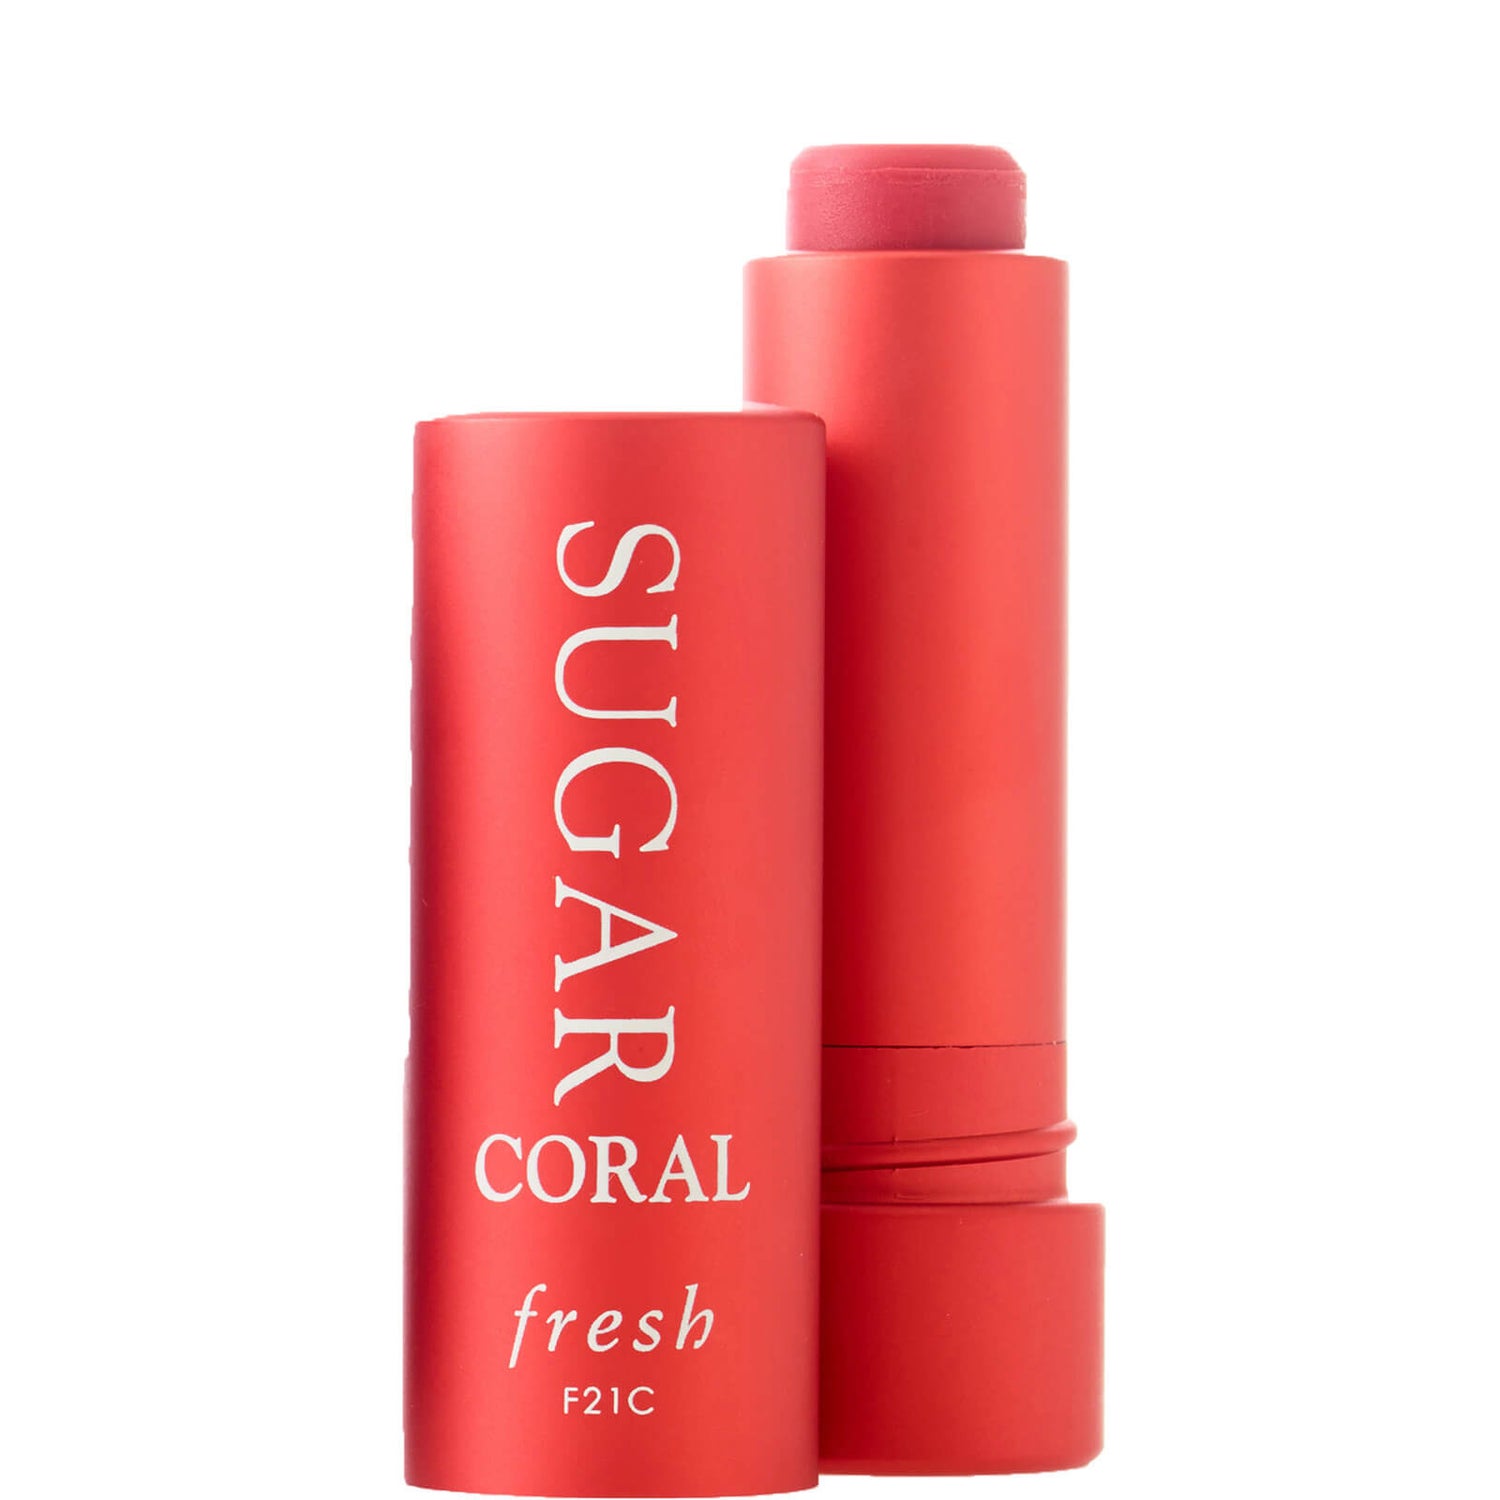 Fresh Tinted Lip Treatment Sunscreen SPF 15 Sugar Coral